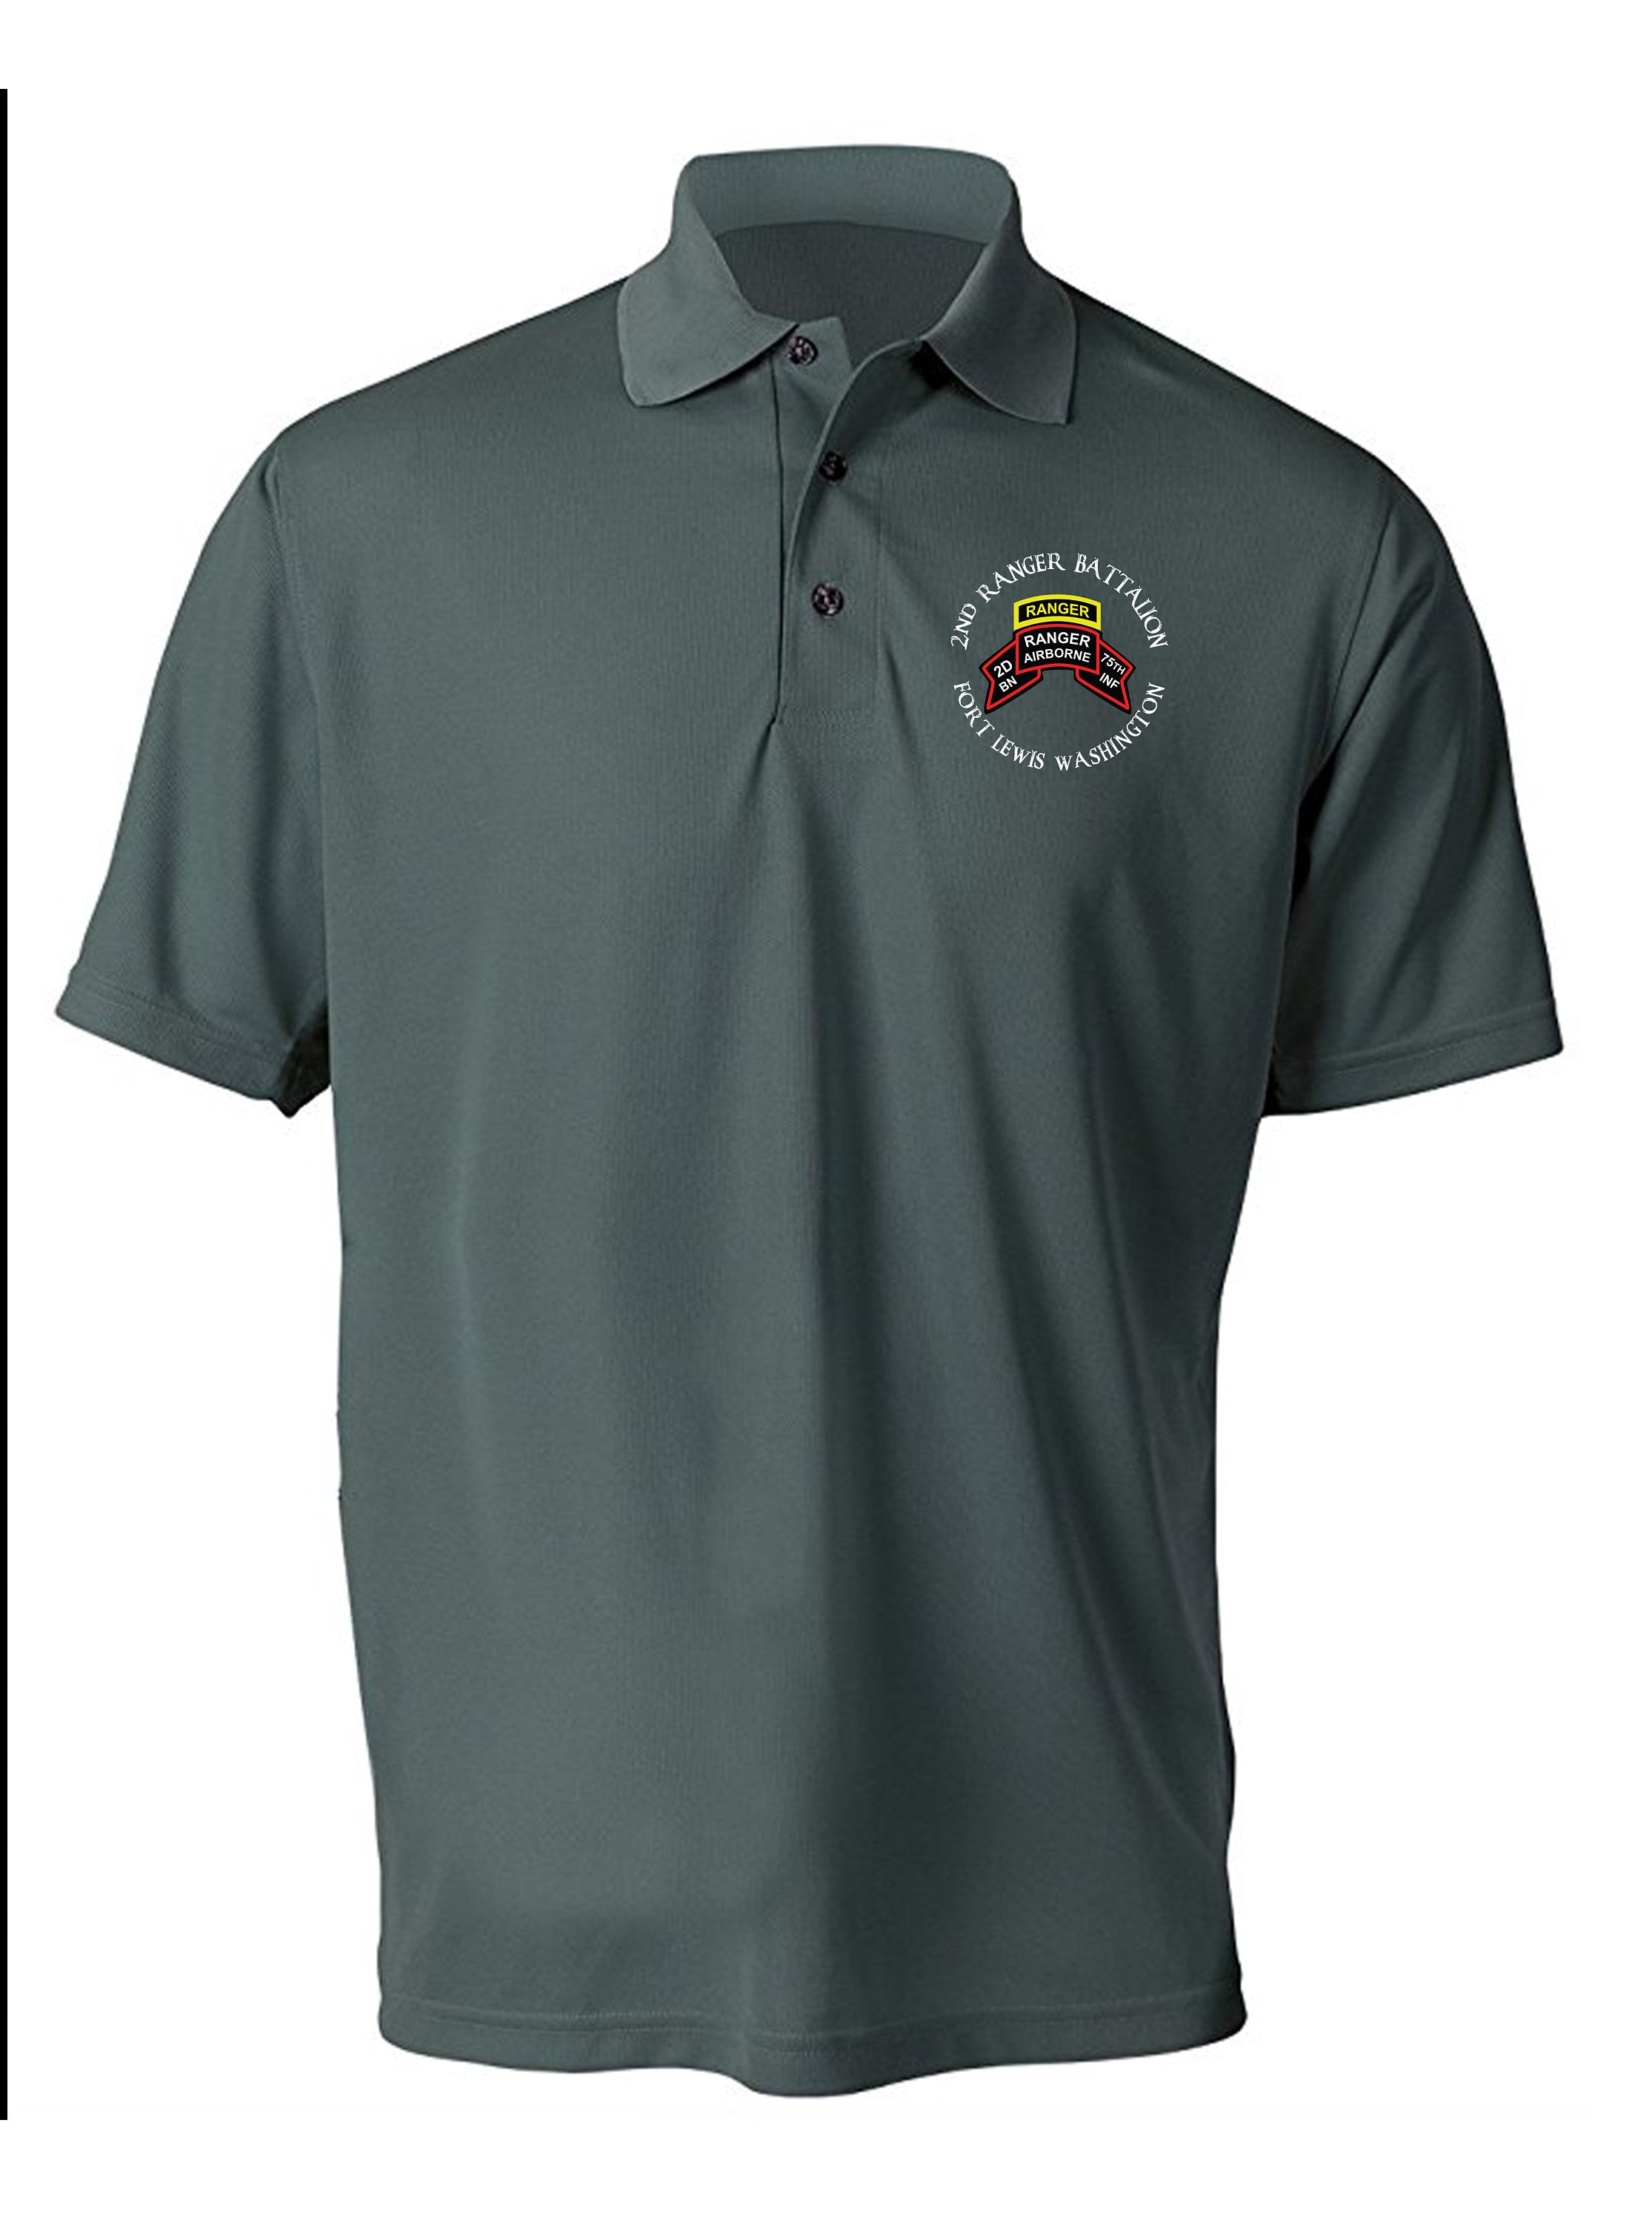 2/75th Ranger Battalion-Original Scroll Embroidered Moisture Wick Polo Shirt -10374